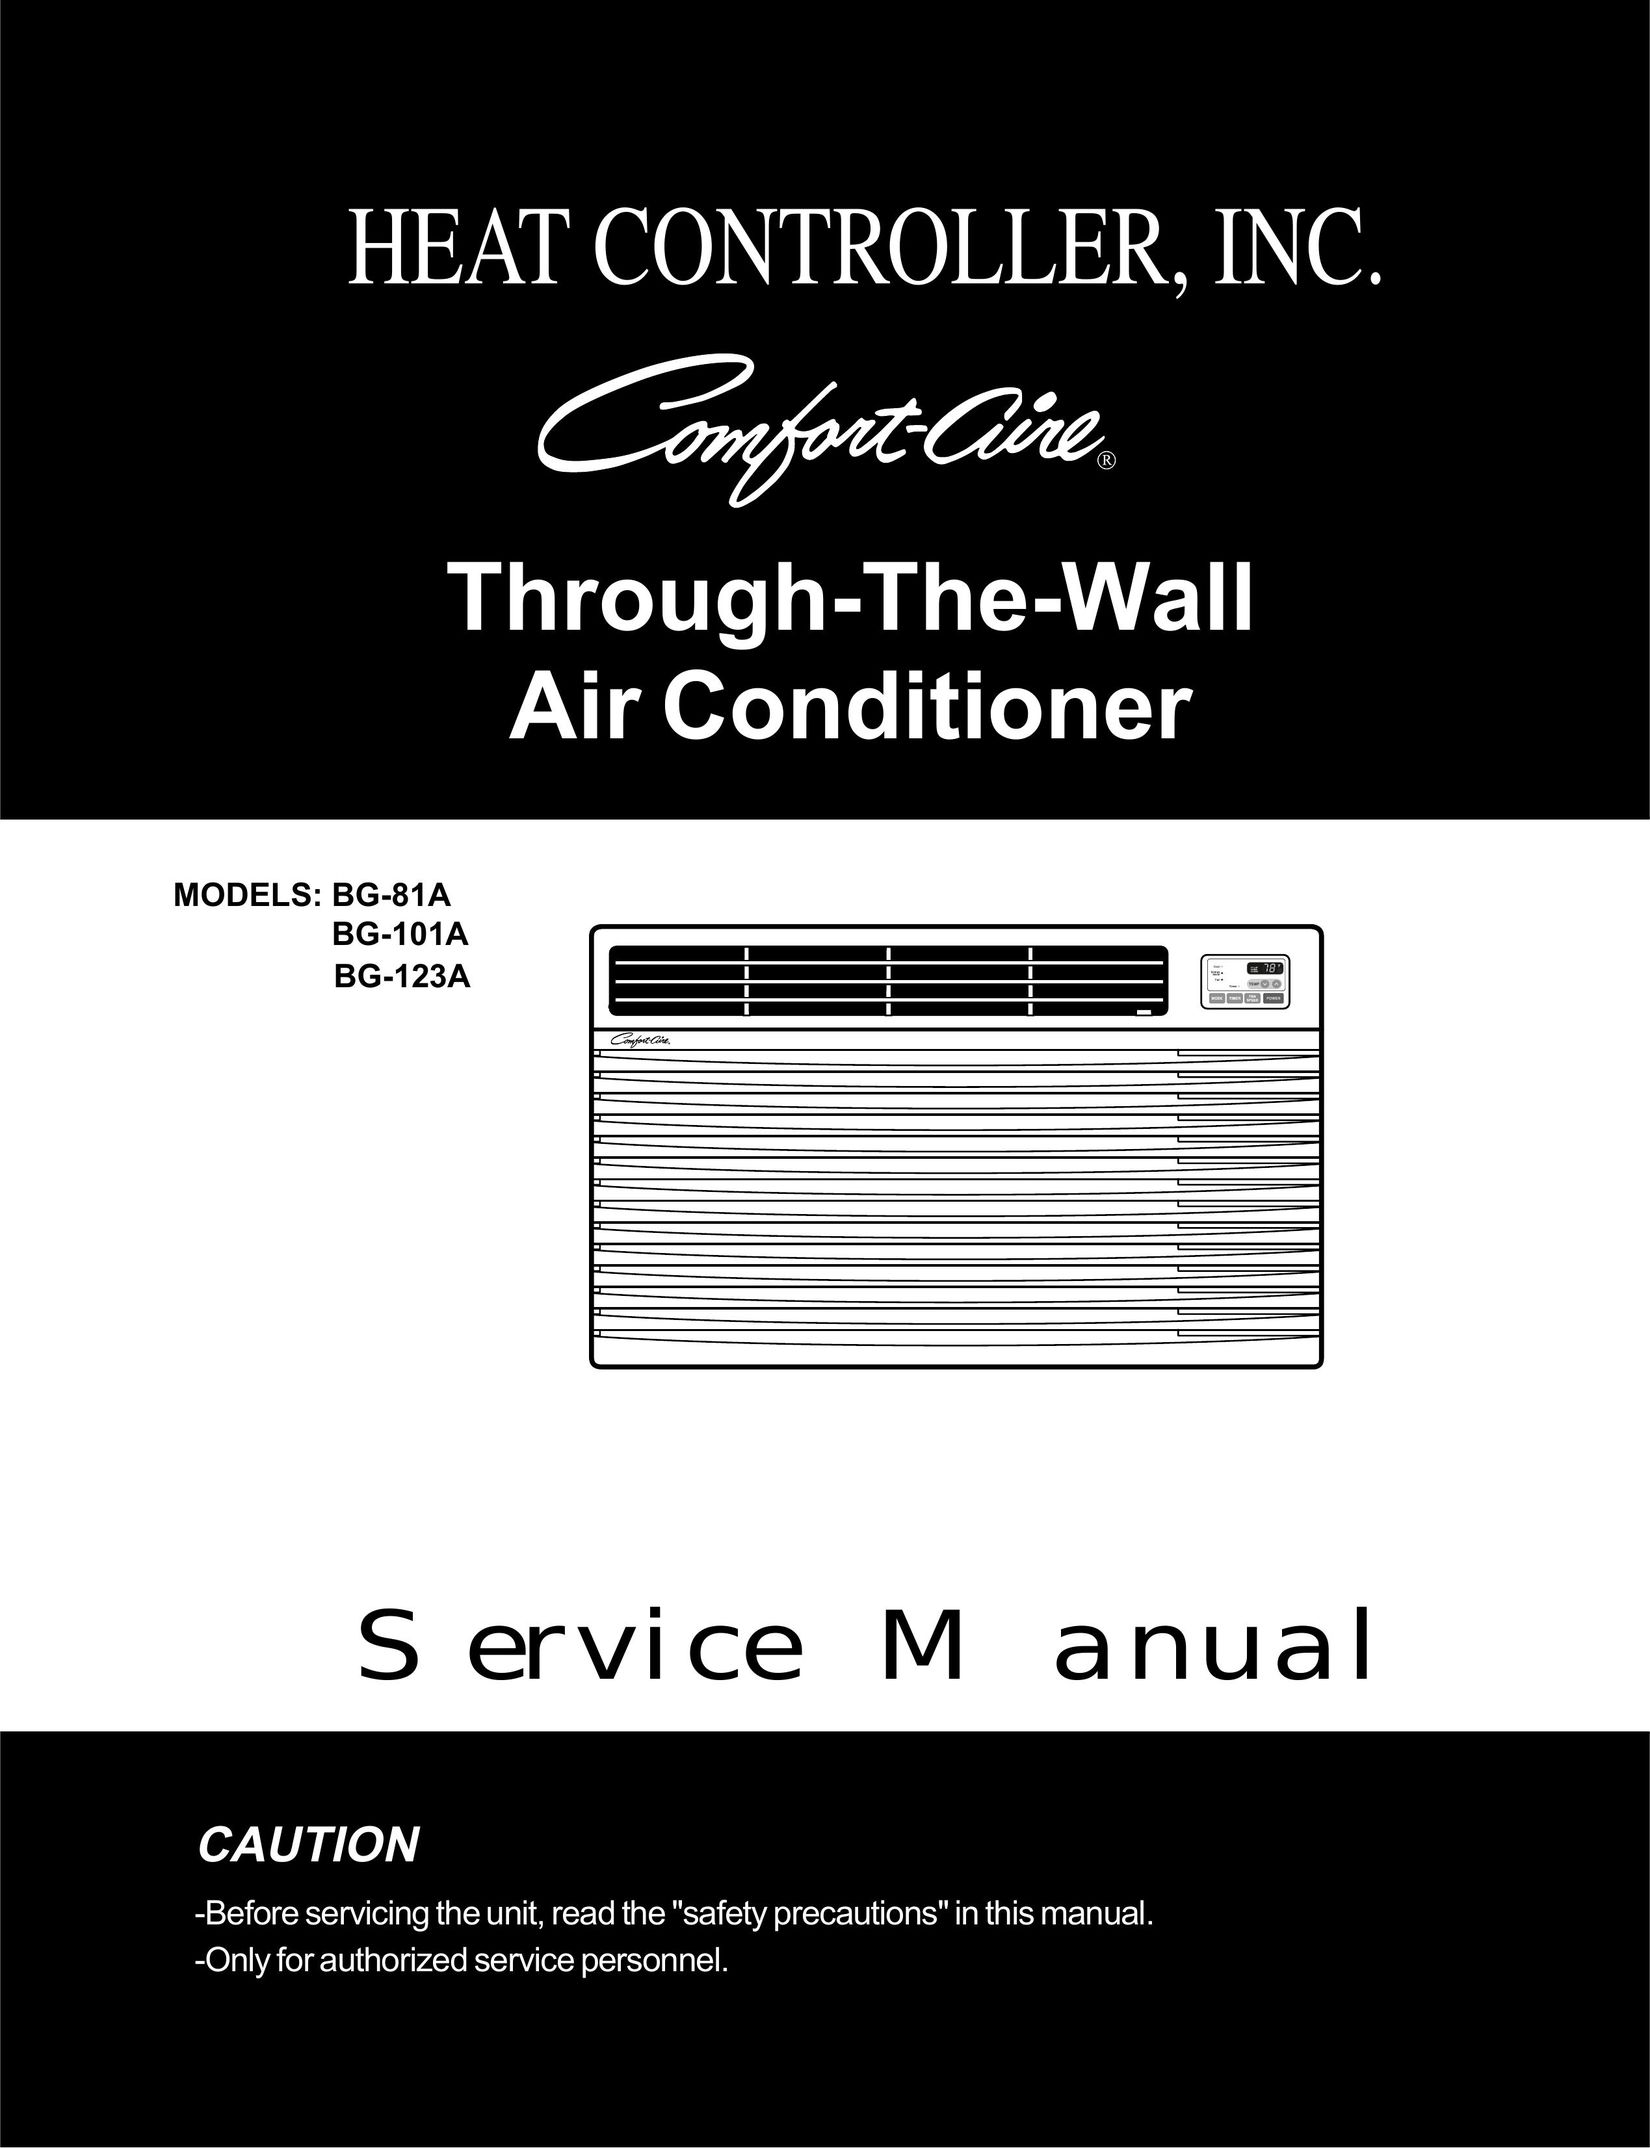 Heat Controller BG-123A Air Conditioner User Manual